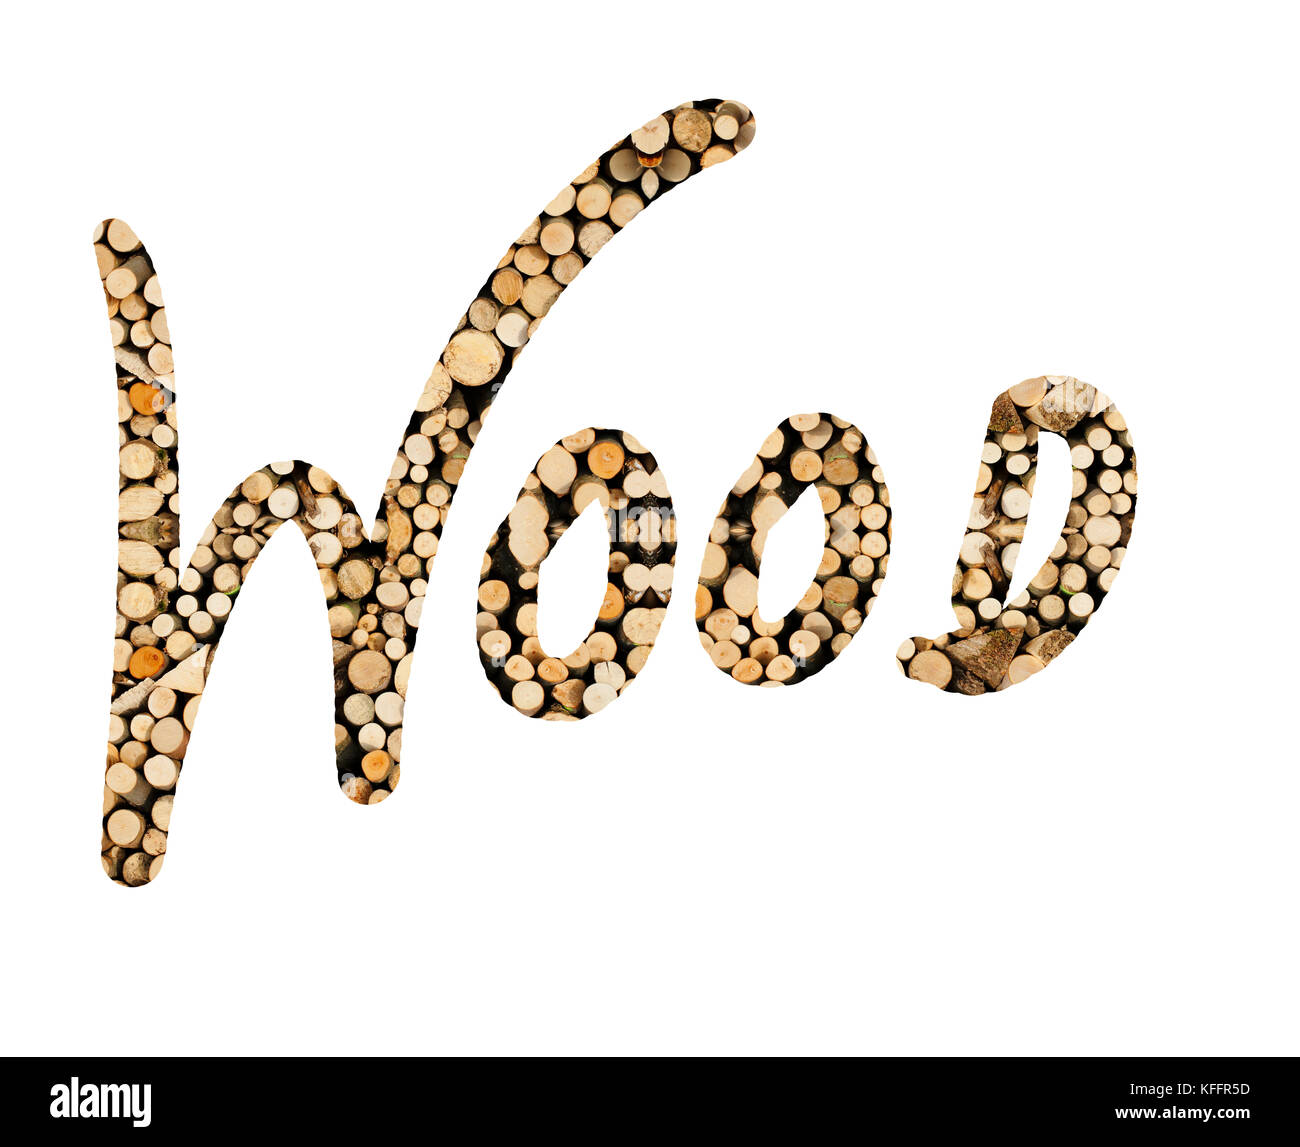 Das Wort Bois mit Holz Stangen geschrieben, dargestellt Banque D'Images